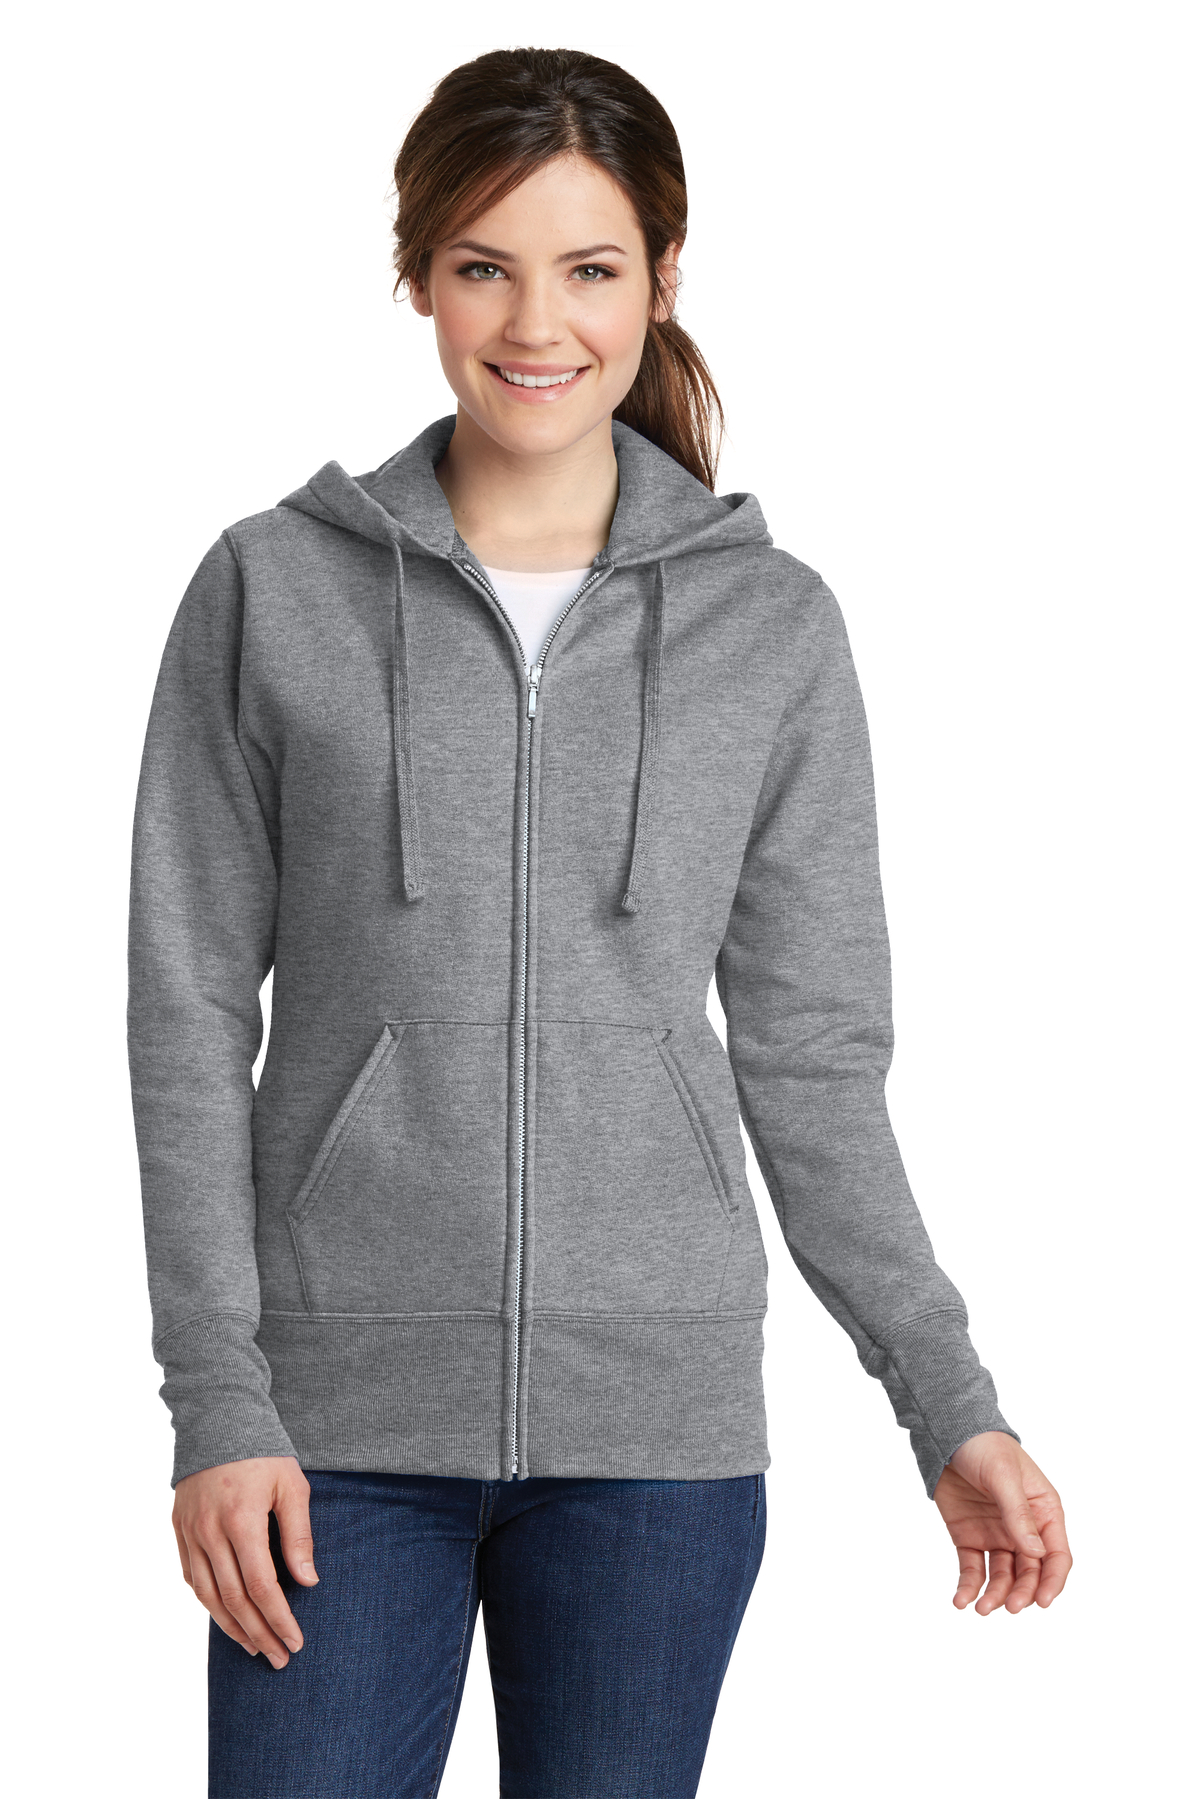 Port & Company Embroidered Women's Core Fleece Full-Zip Hooded ...